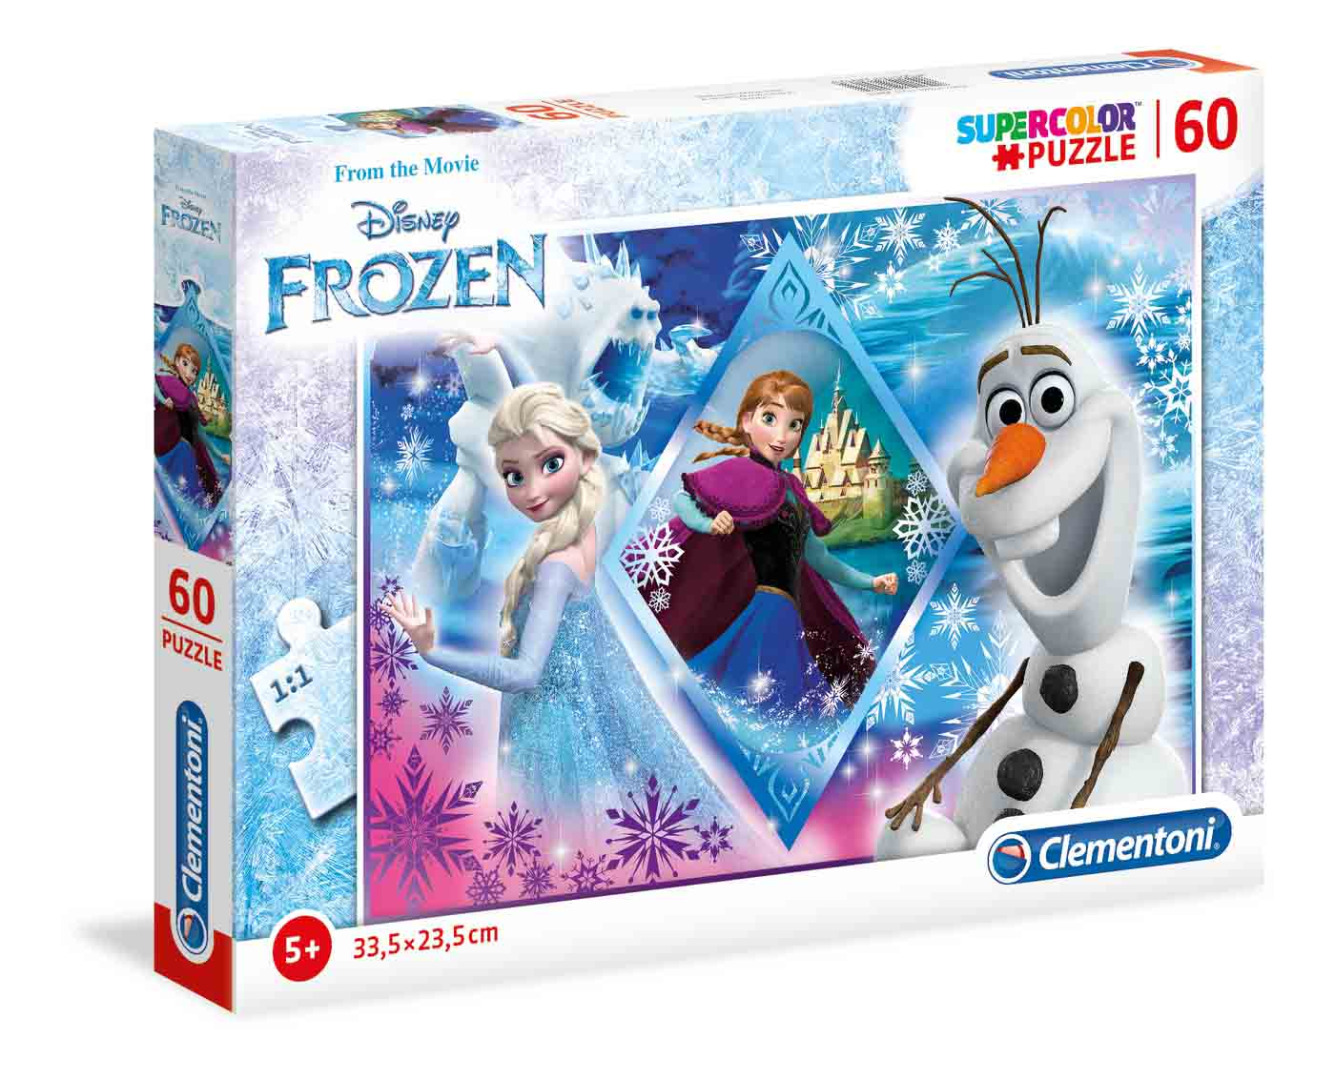 Disney Frozen - 60 peças - Supercolor Puzzle (Para mais de 5 anos)